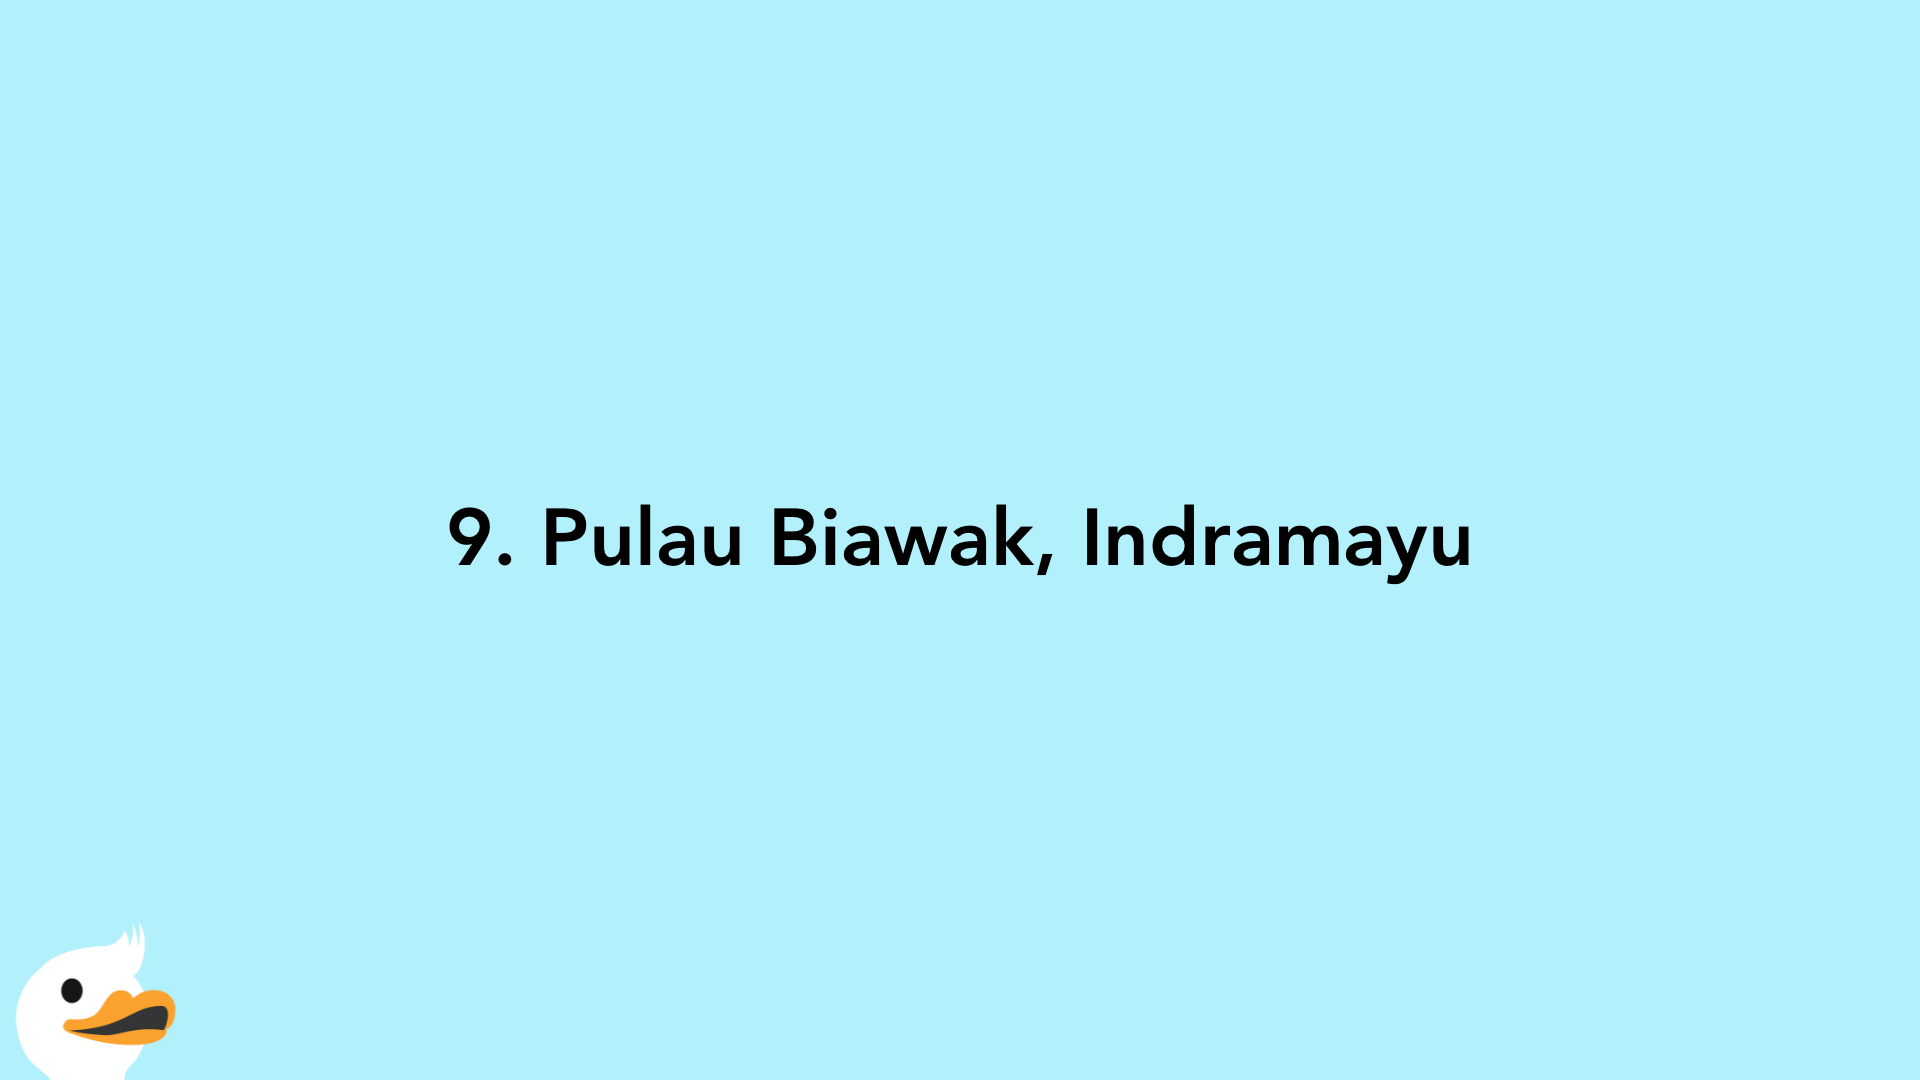 9. Pulau Biawak, Indramayu